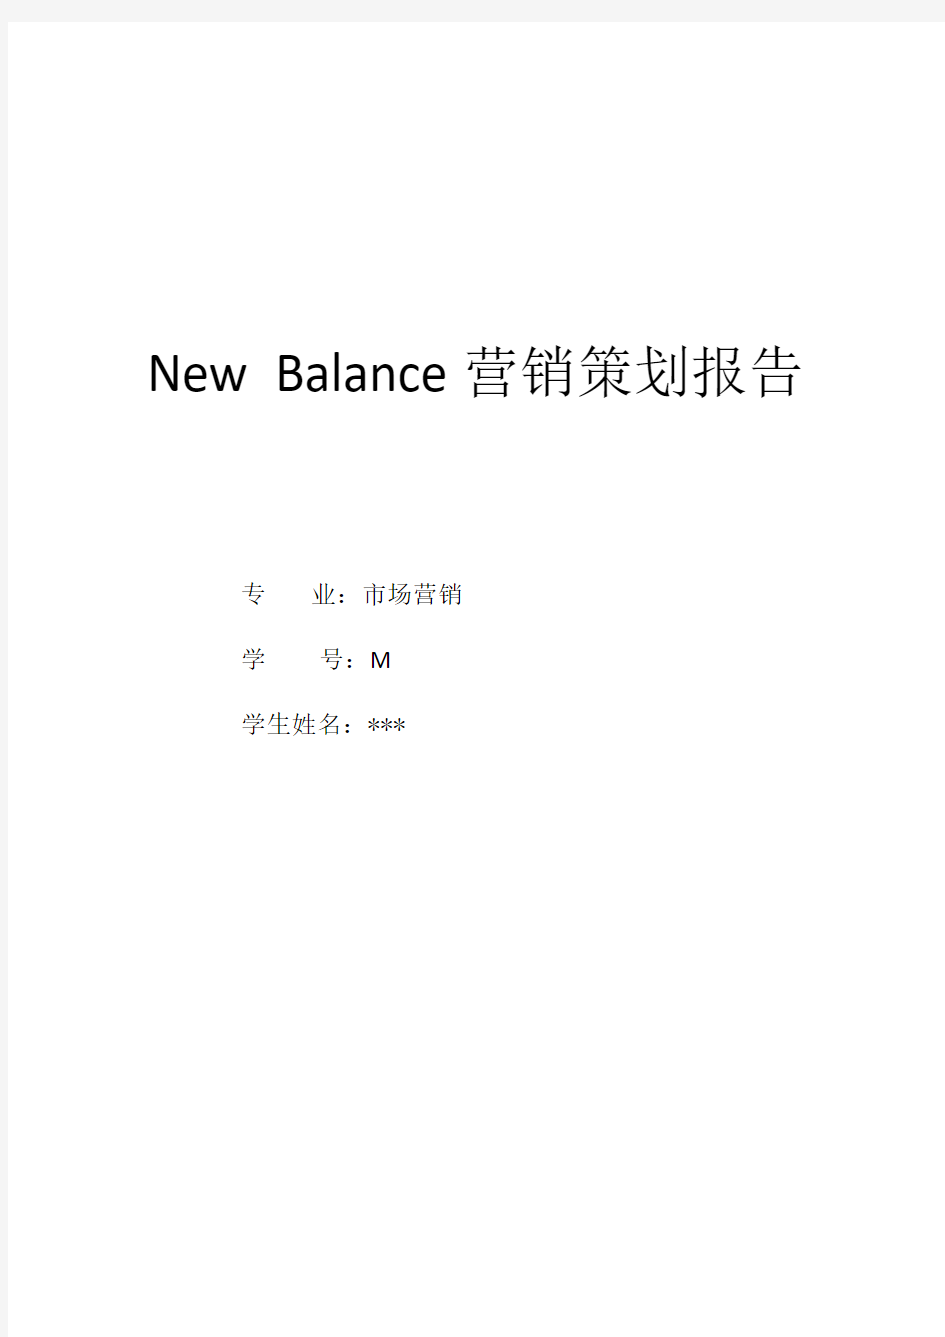 New Balance 营销策划报告